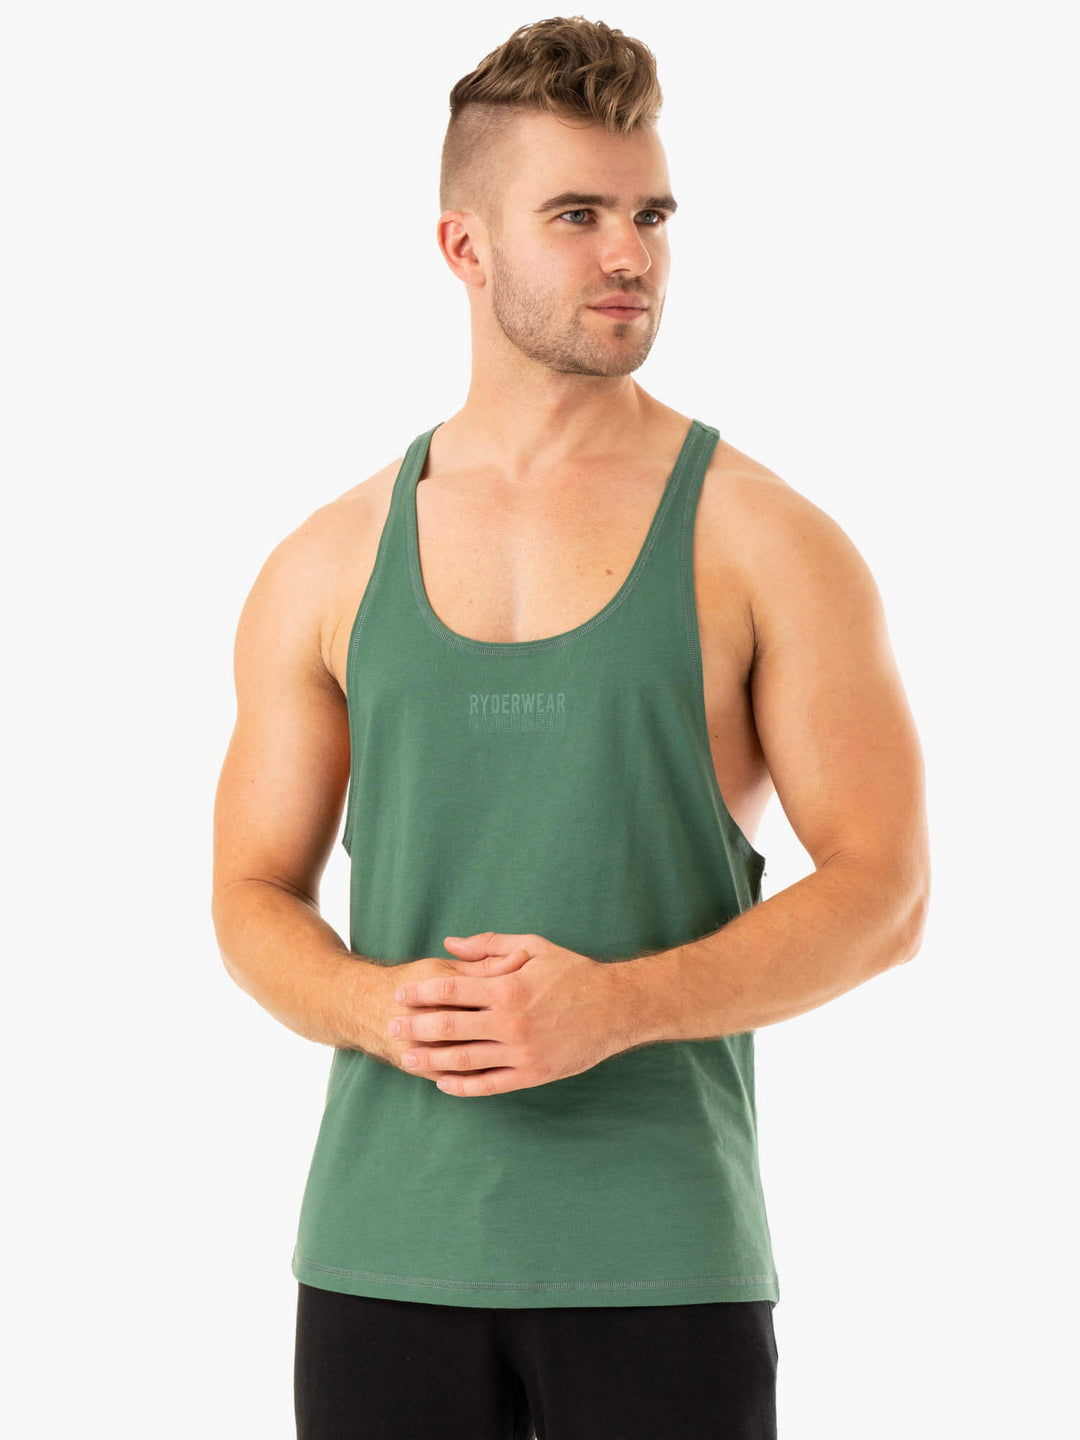 Limitless Stringer T-Back - Forest Green Clothing Ryderwear 